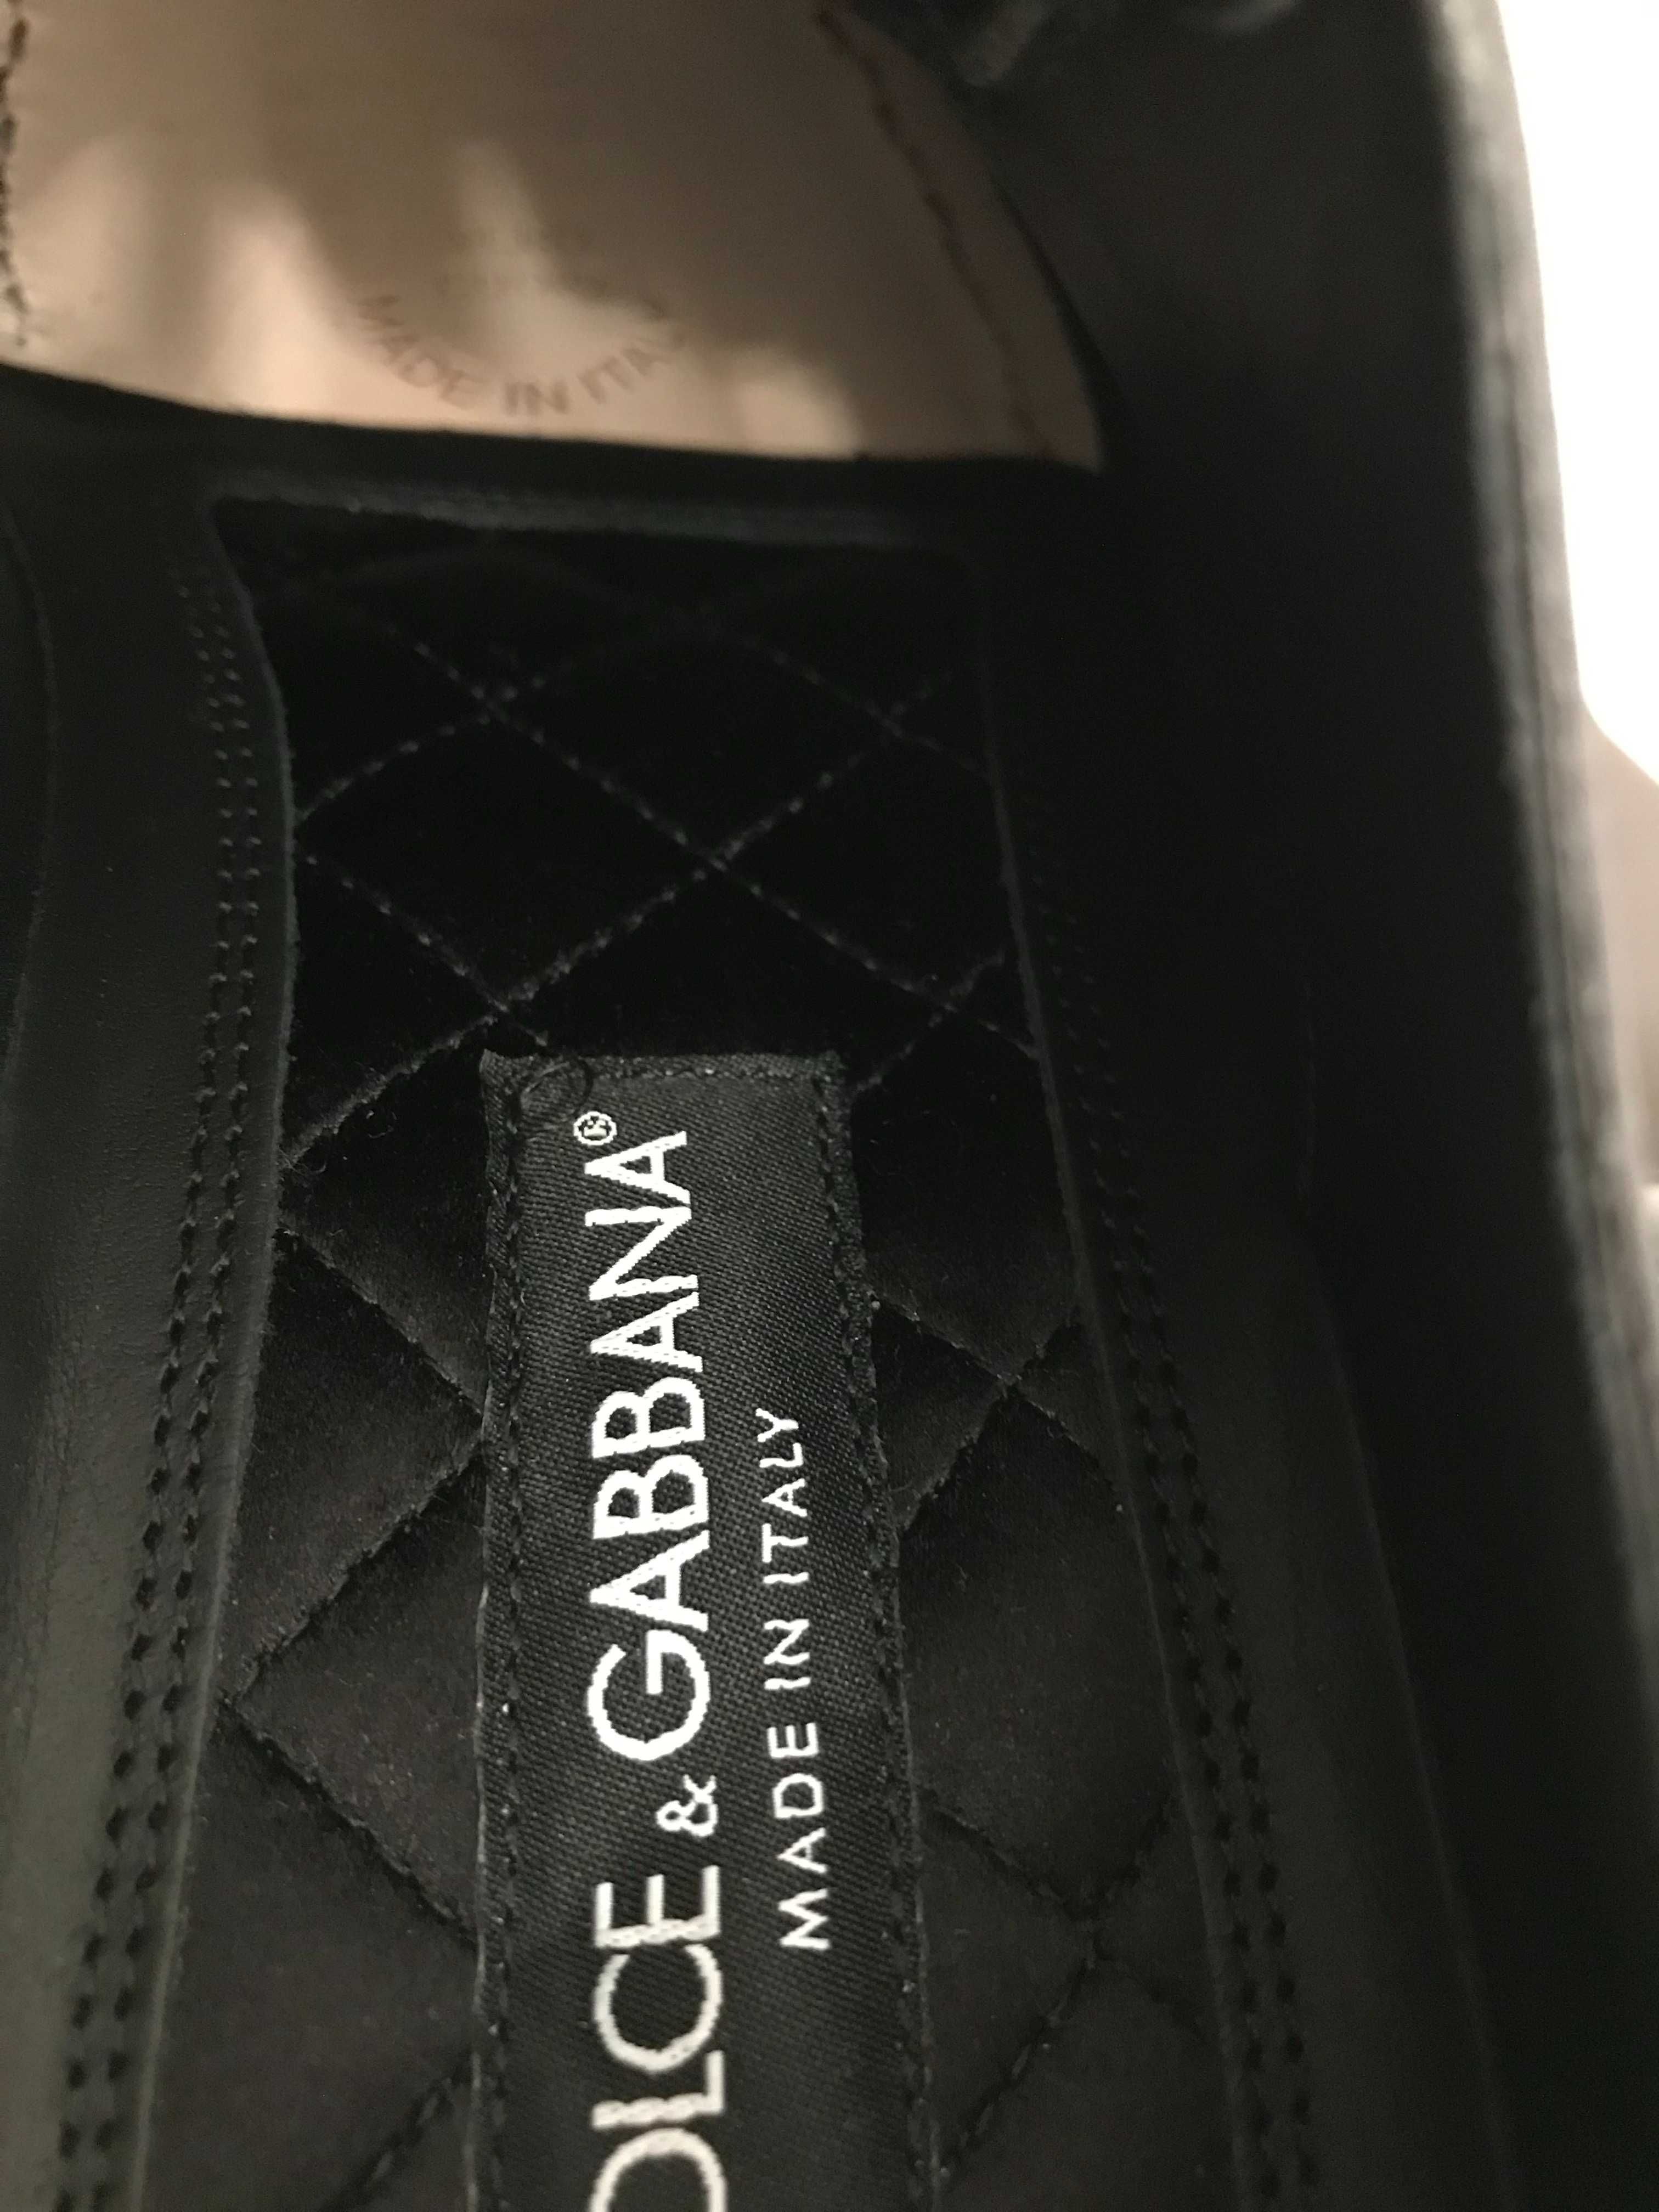 Dolce Gabbana pantofi 39, originali, full box, retail 695 euro